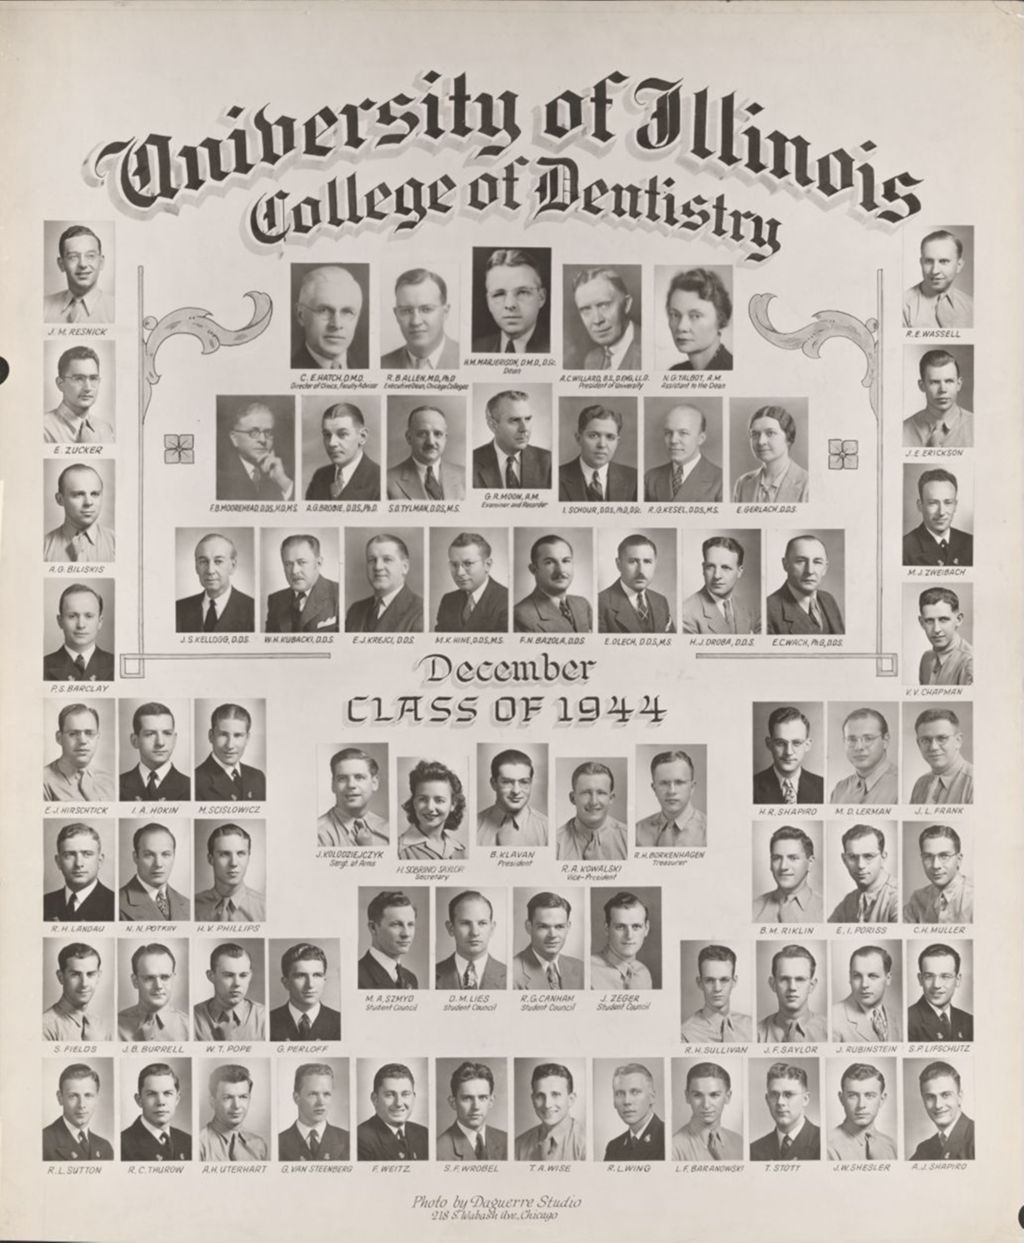 December 1944 graduating class, University of Illinois College of Dentistry